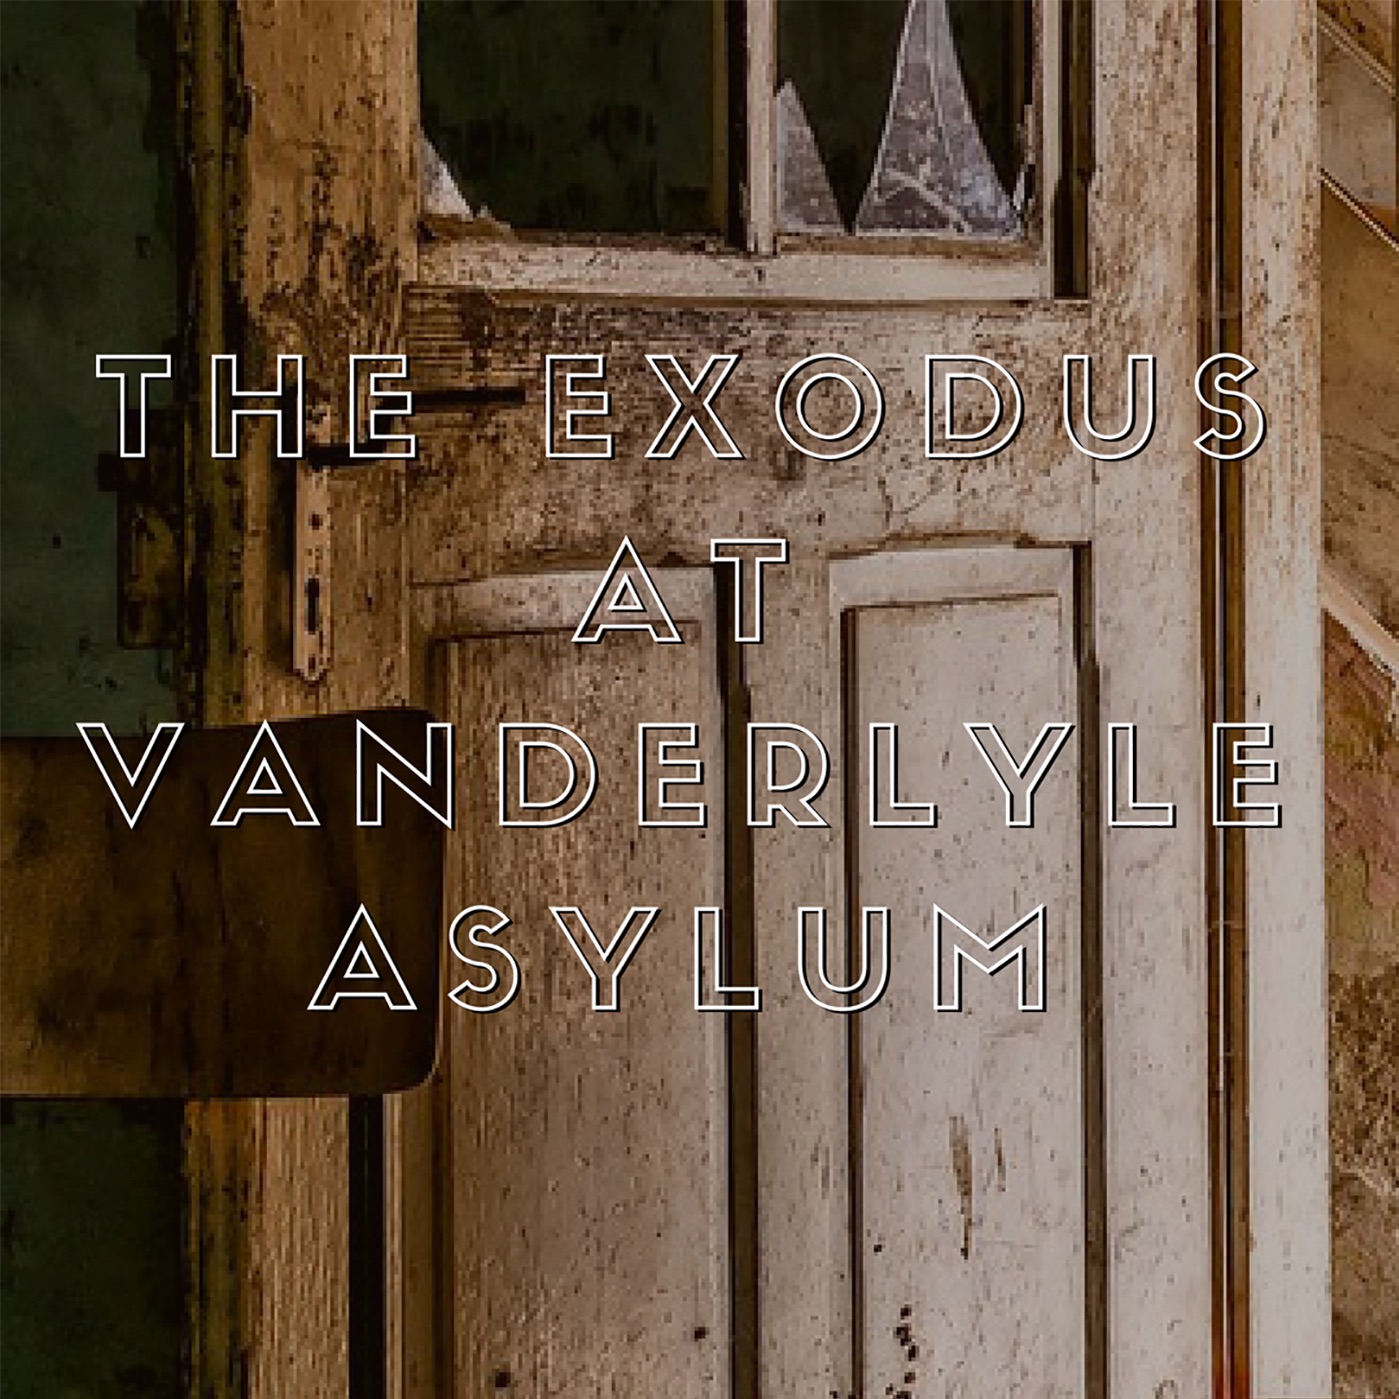 3. The Exodus at Vanderlyle Asylum